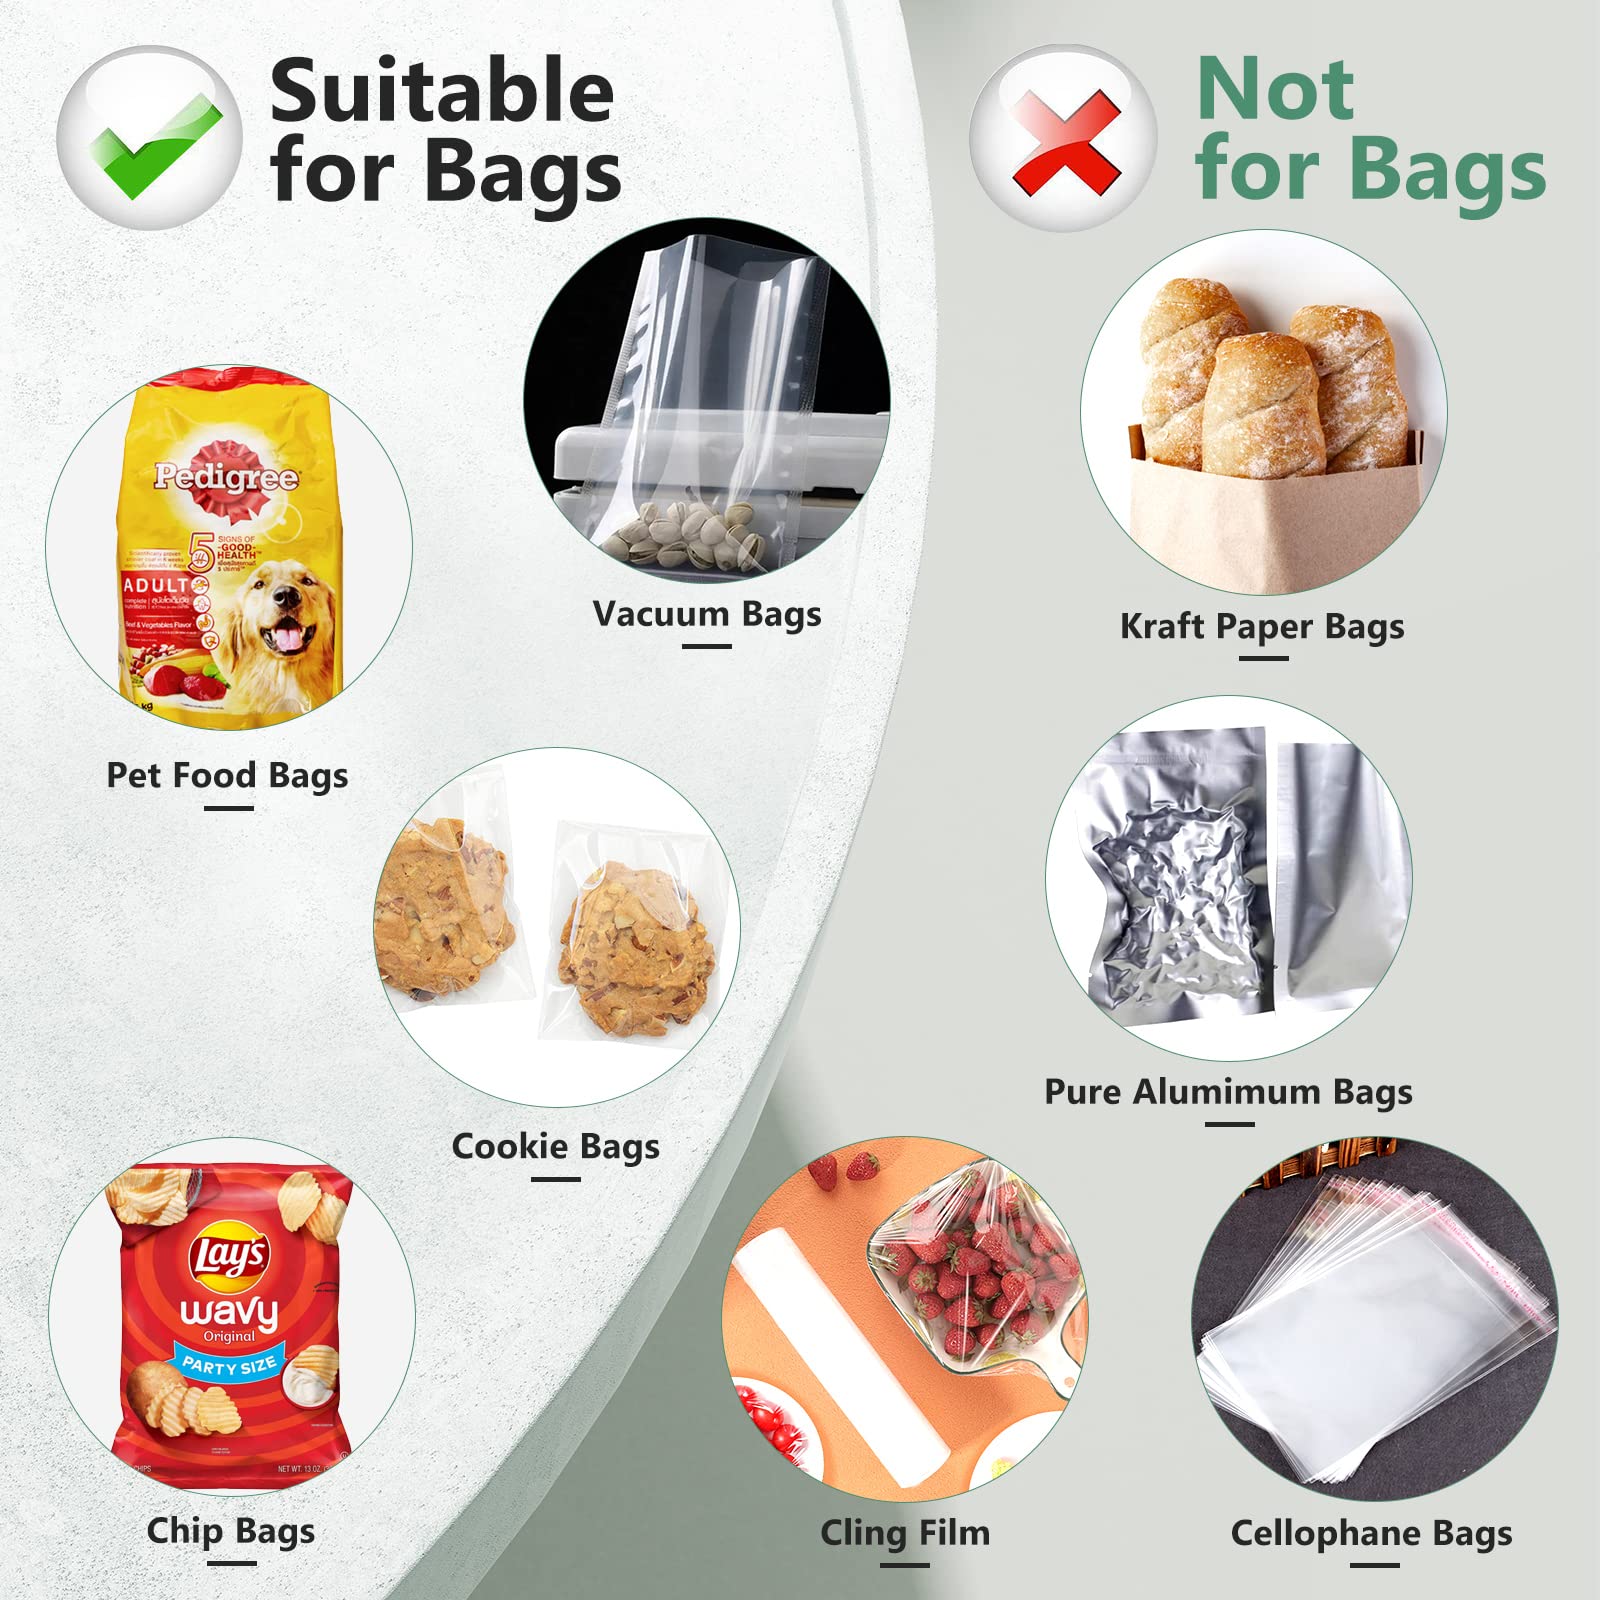 Cheweetty Mini Bag Sealer, Handheld Heat Sealer, Upgraded 2 IN 1 Heat Sealer & Cutter USB Rechargeable, Portable Resealer Machine Kitchen Gadget for Plastic Bag Chip Bag Food Snack Storage(Green)